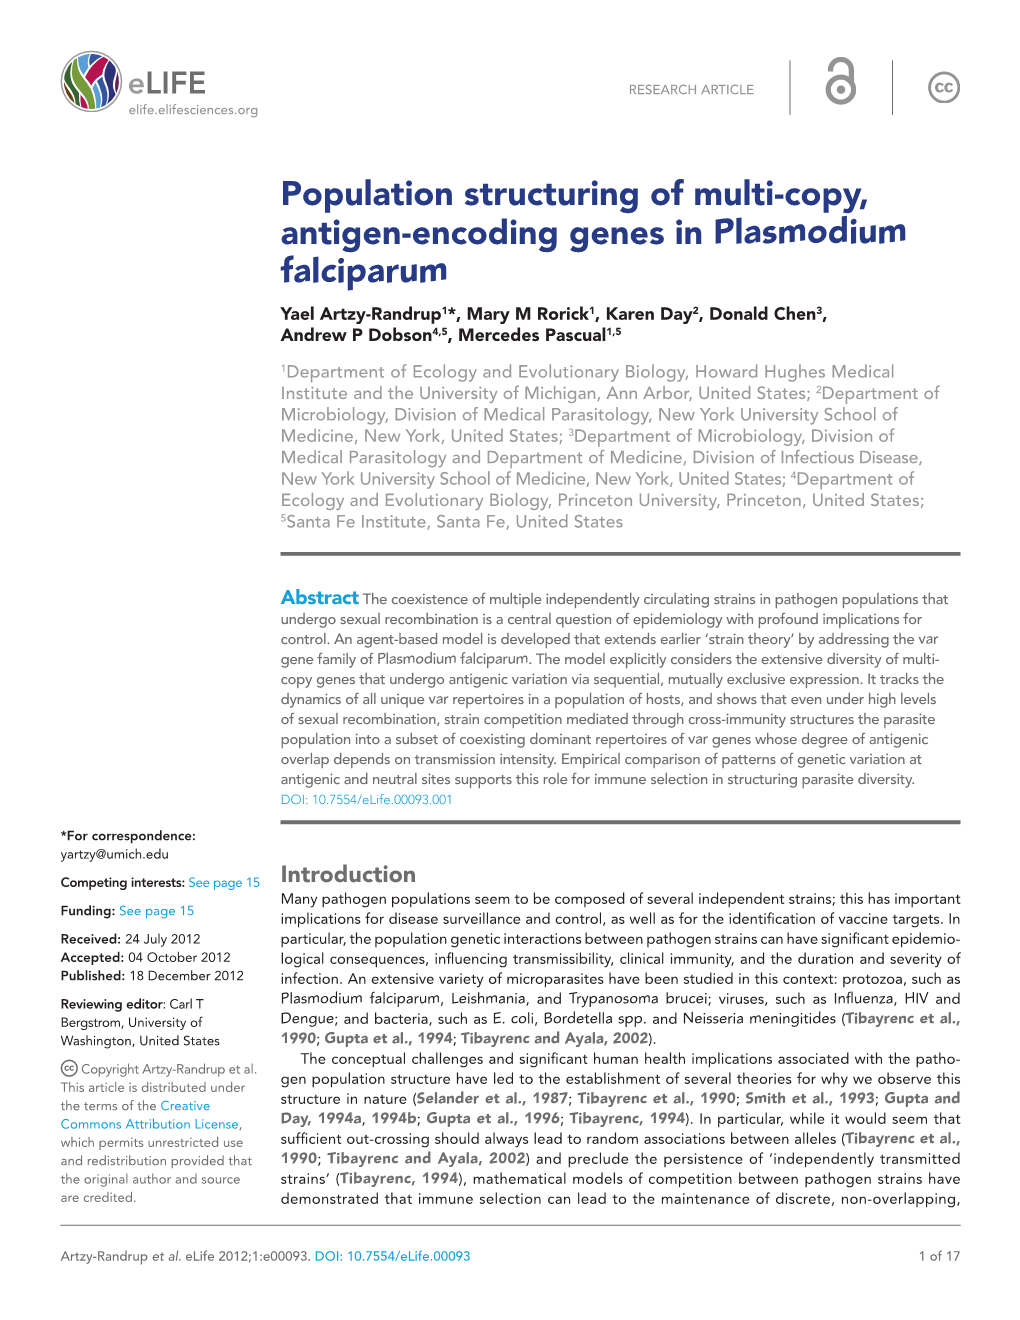 Population Structuring of Multi-Copy, Antigen-Encoding Genes In